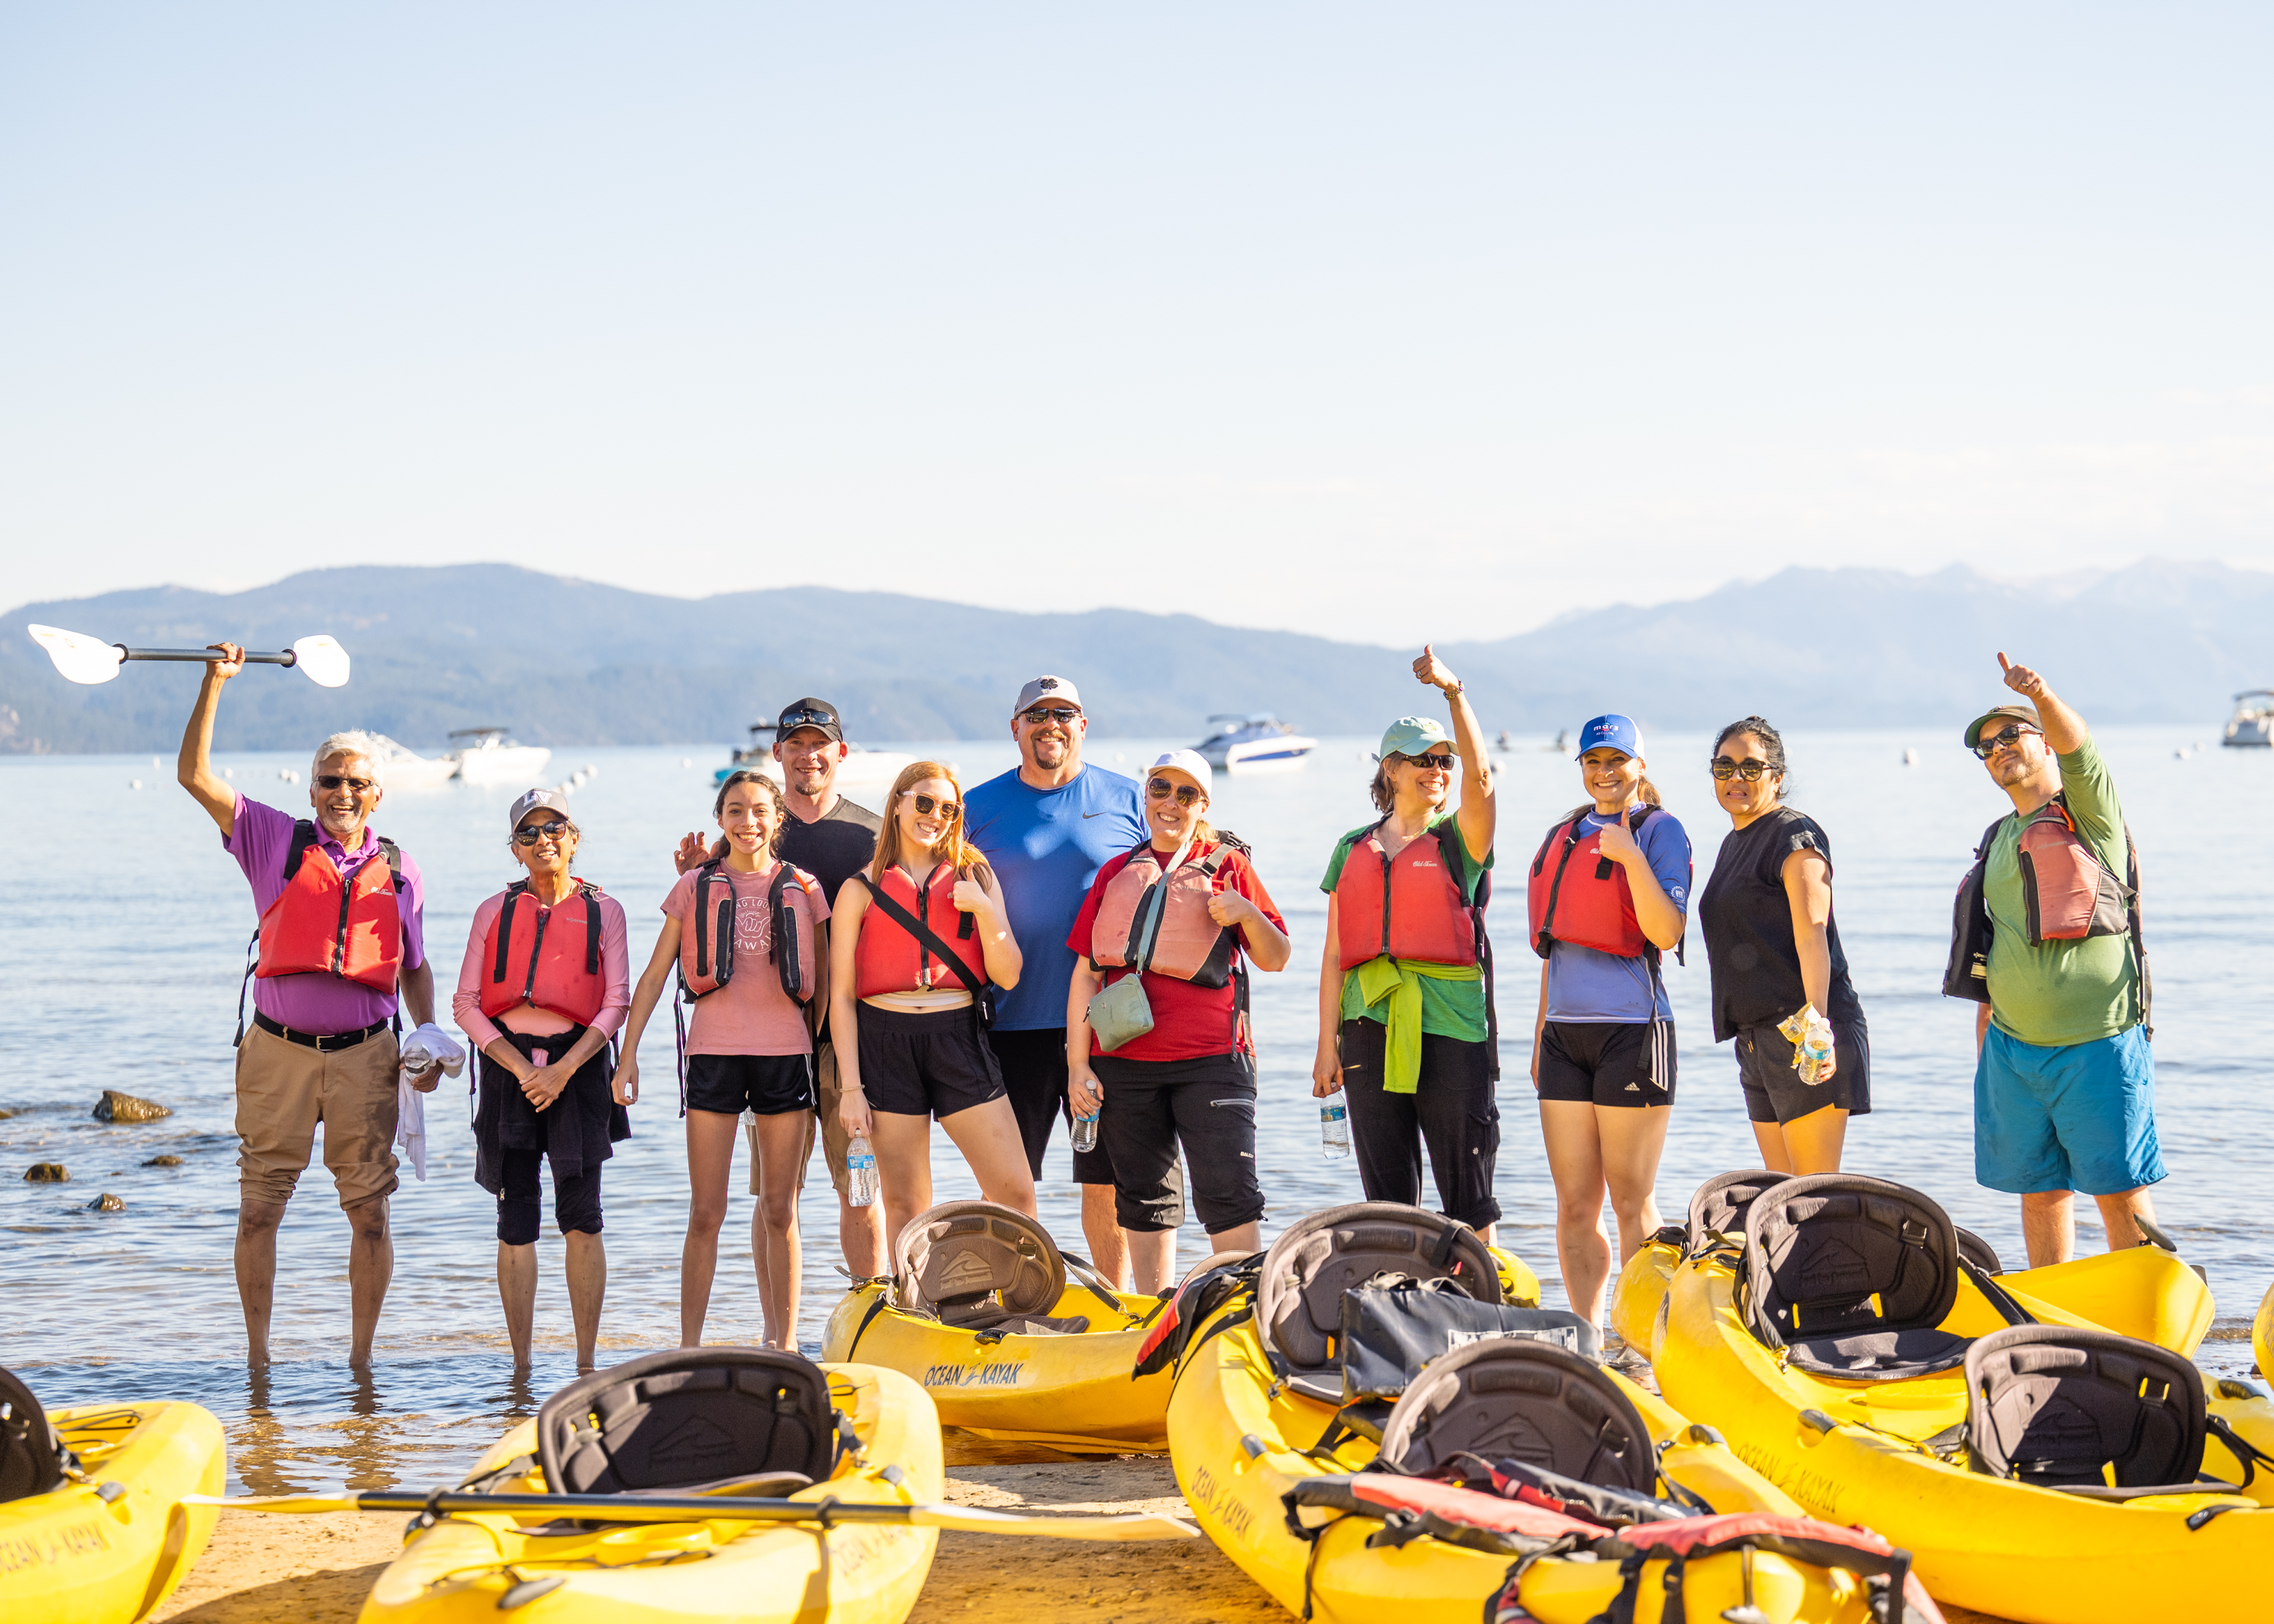 2022 AMCA Annual Meeting attendees embark on a kayak tour.